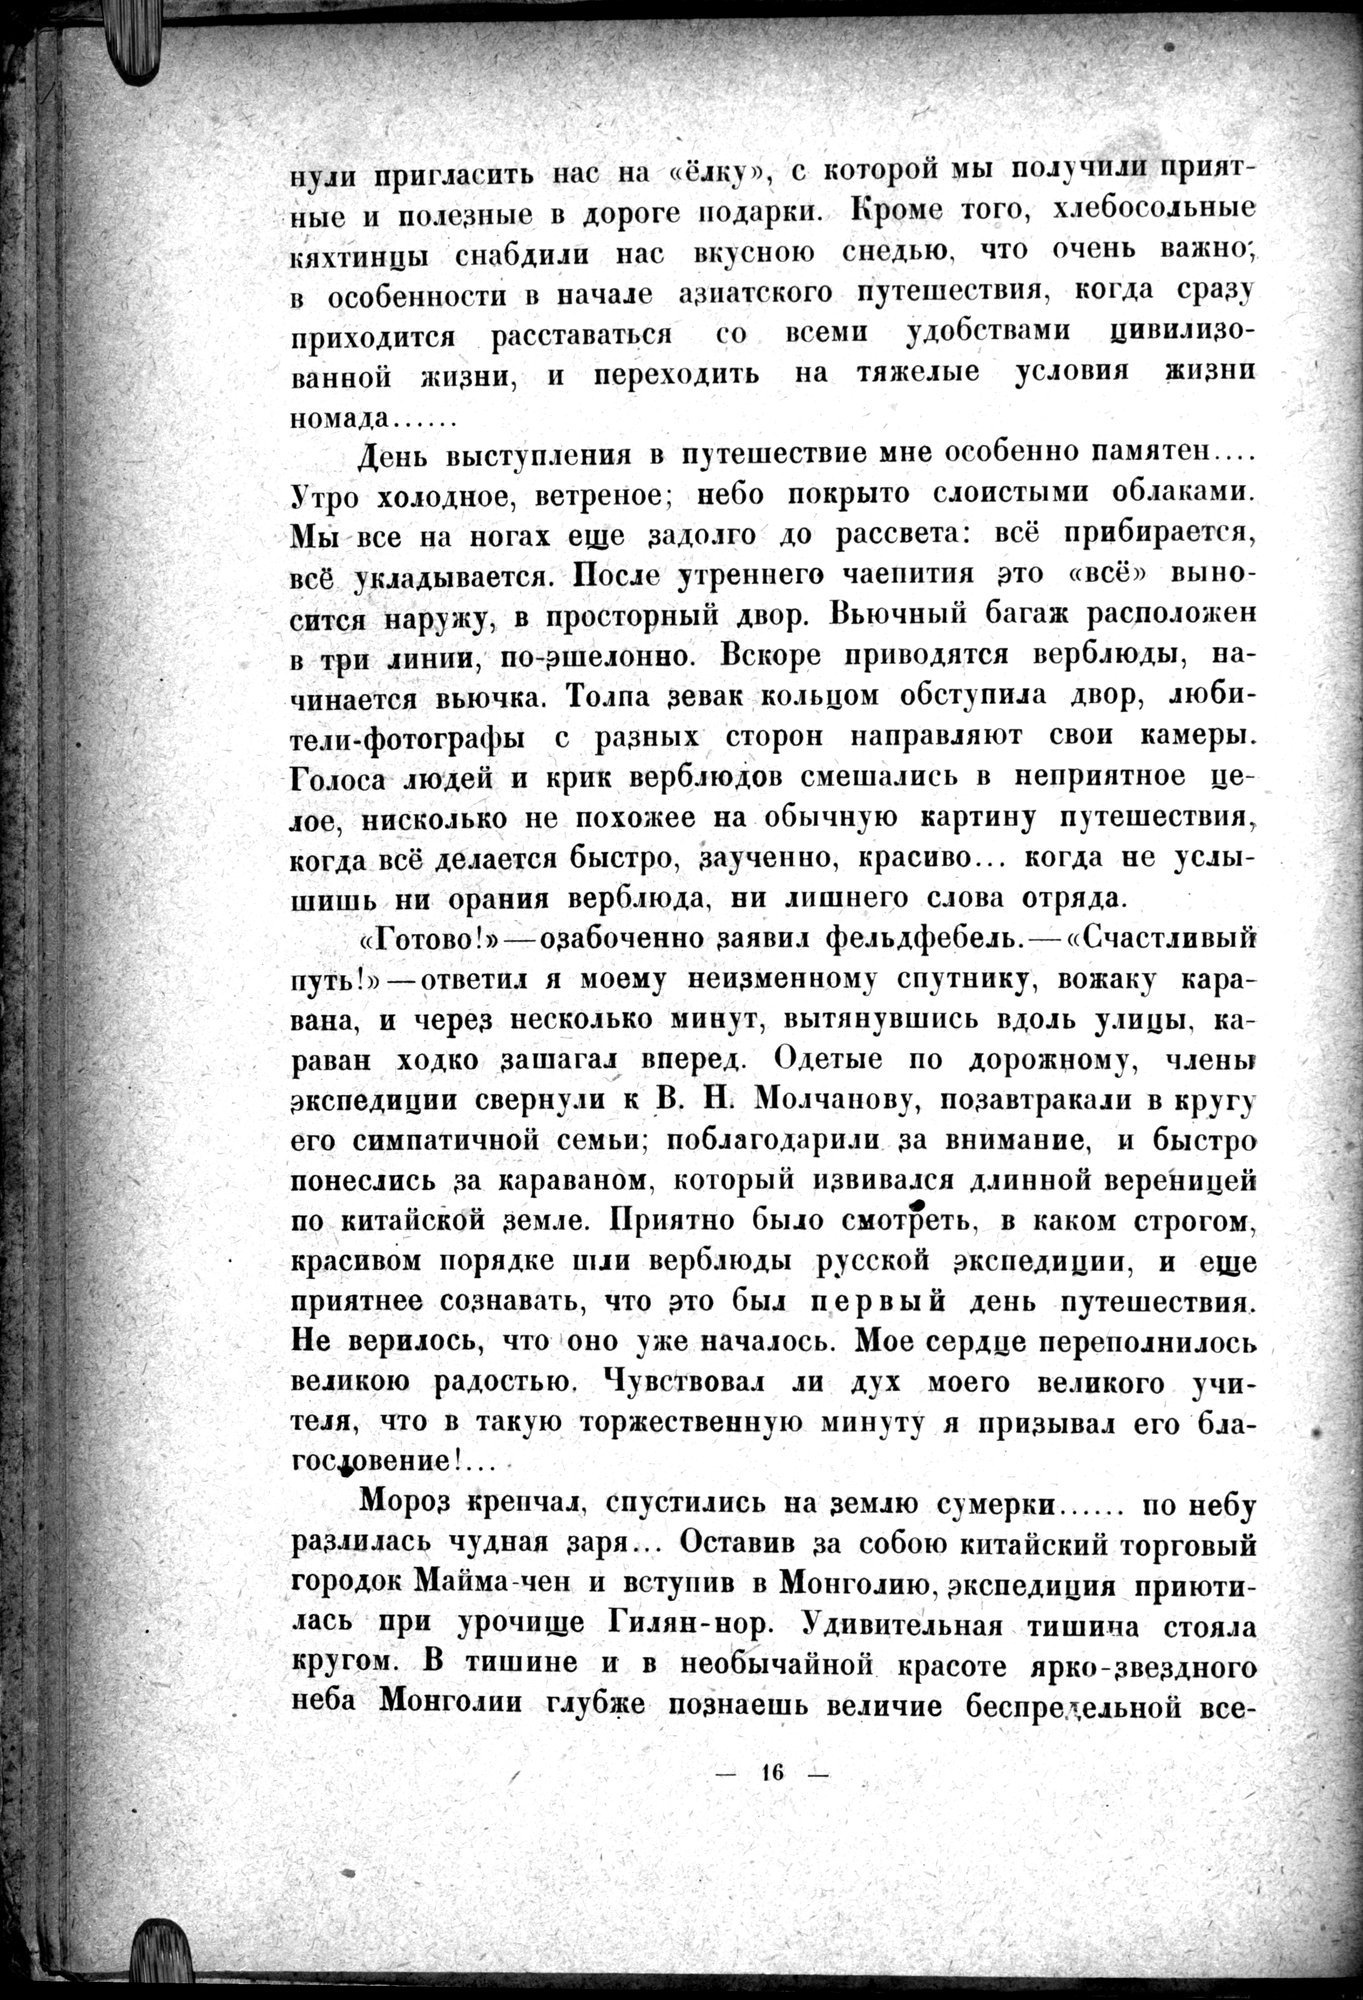 Mongoliya i Amdo i mertby gorod Khara-Khoto : vol.1 / Page 32 (Grayscale High Resolution Image)